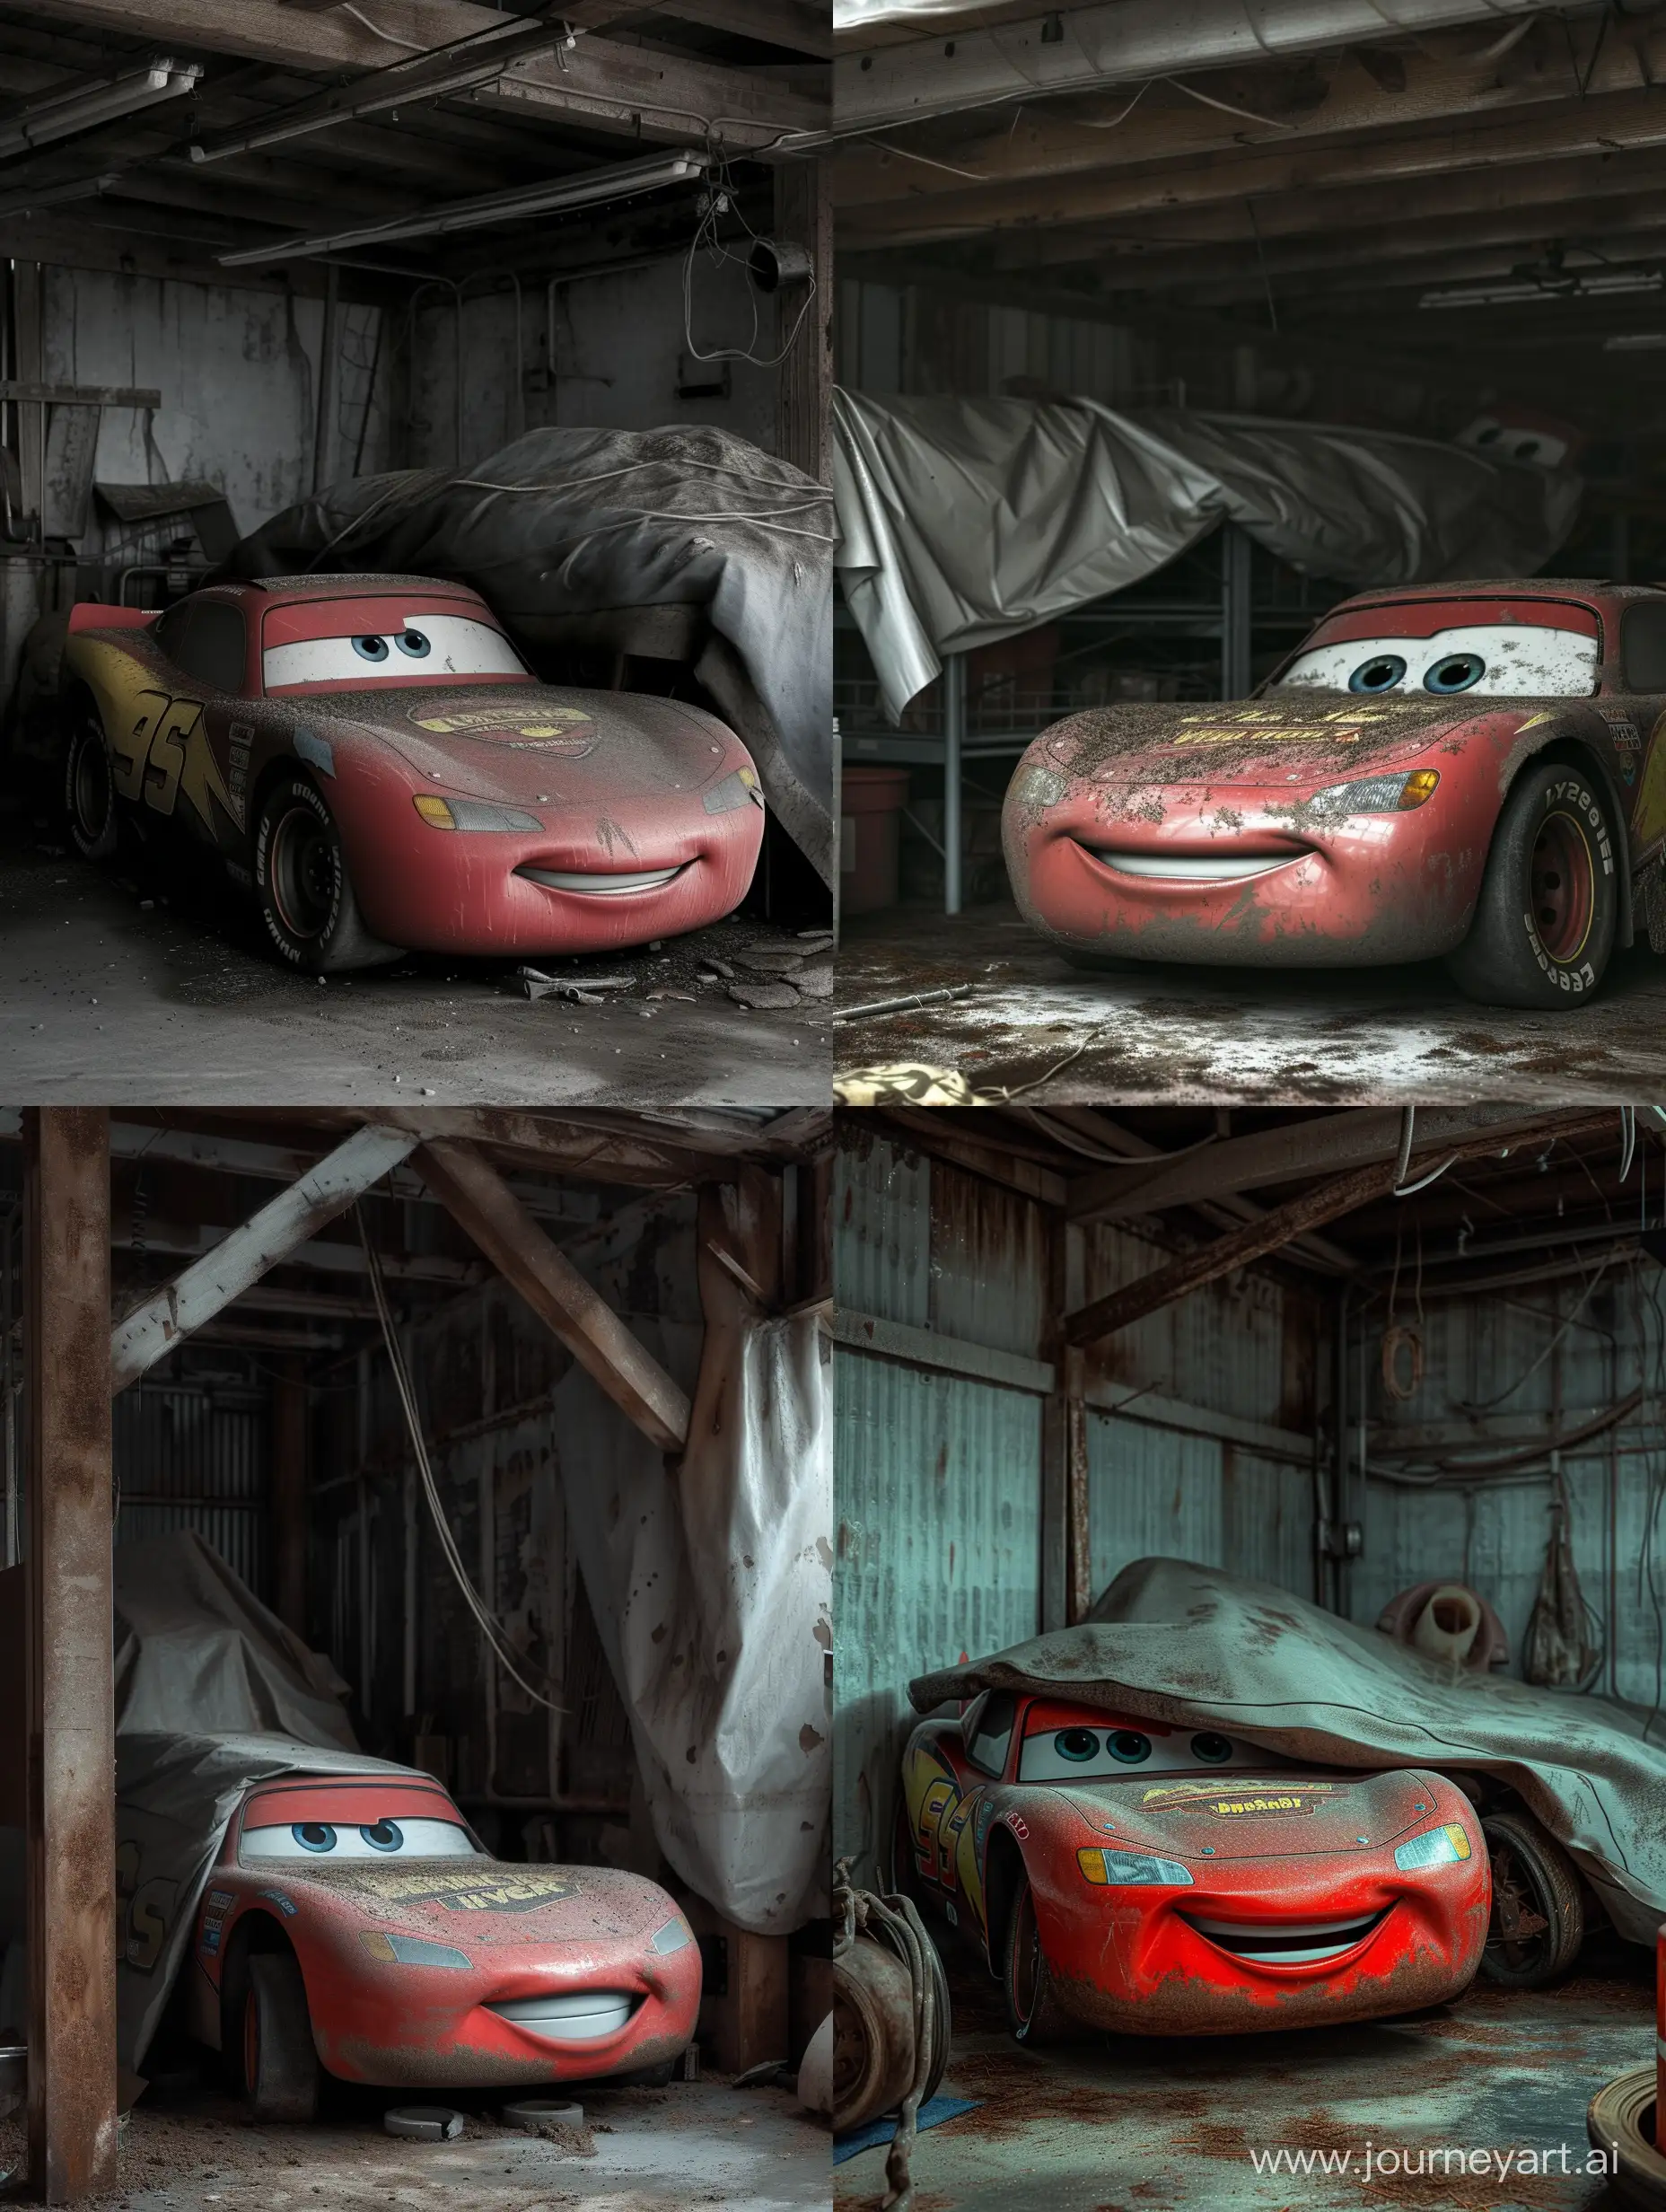 Abandoned-Lightning-McQueen-in-a-Gloomy-Garage